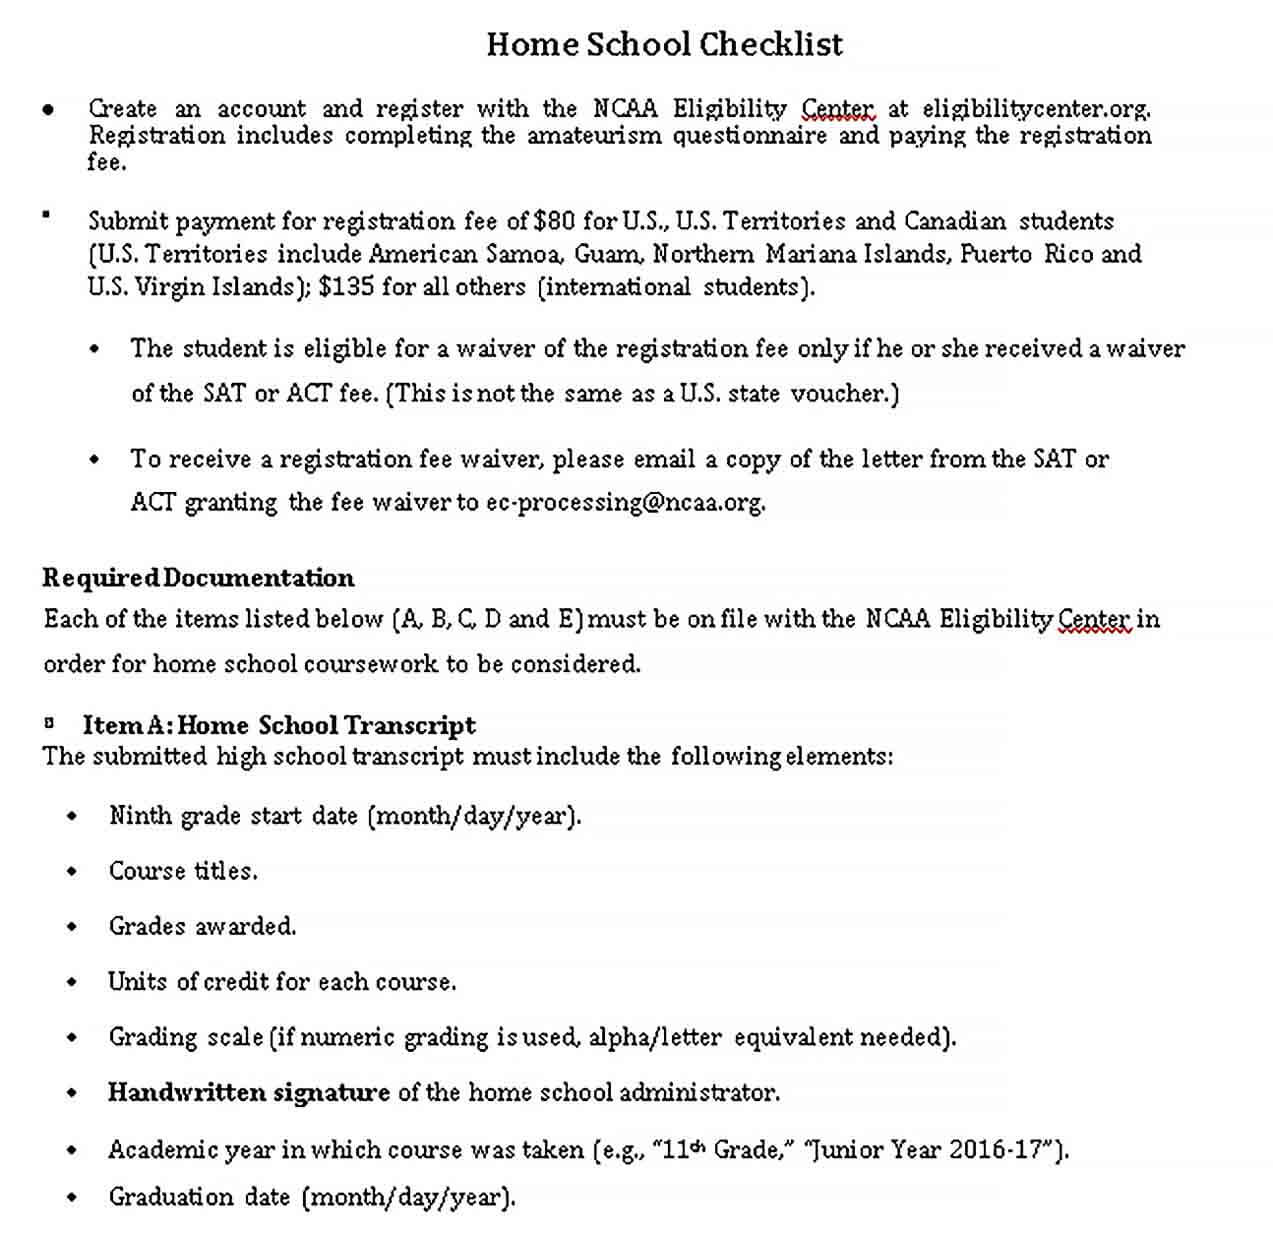 Sample Home School Checklist